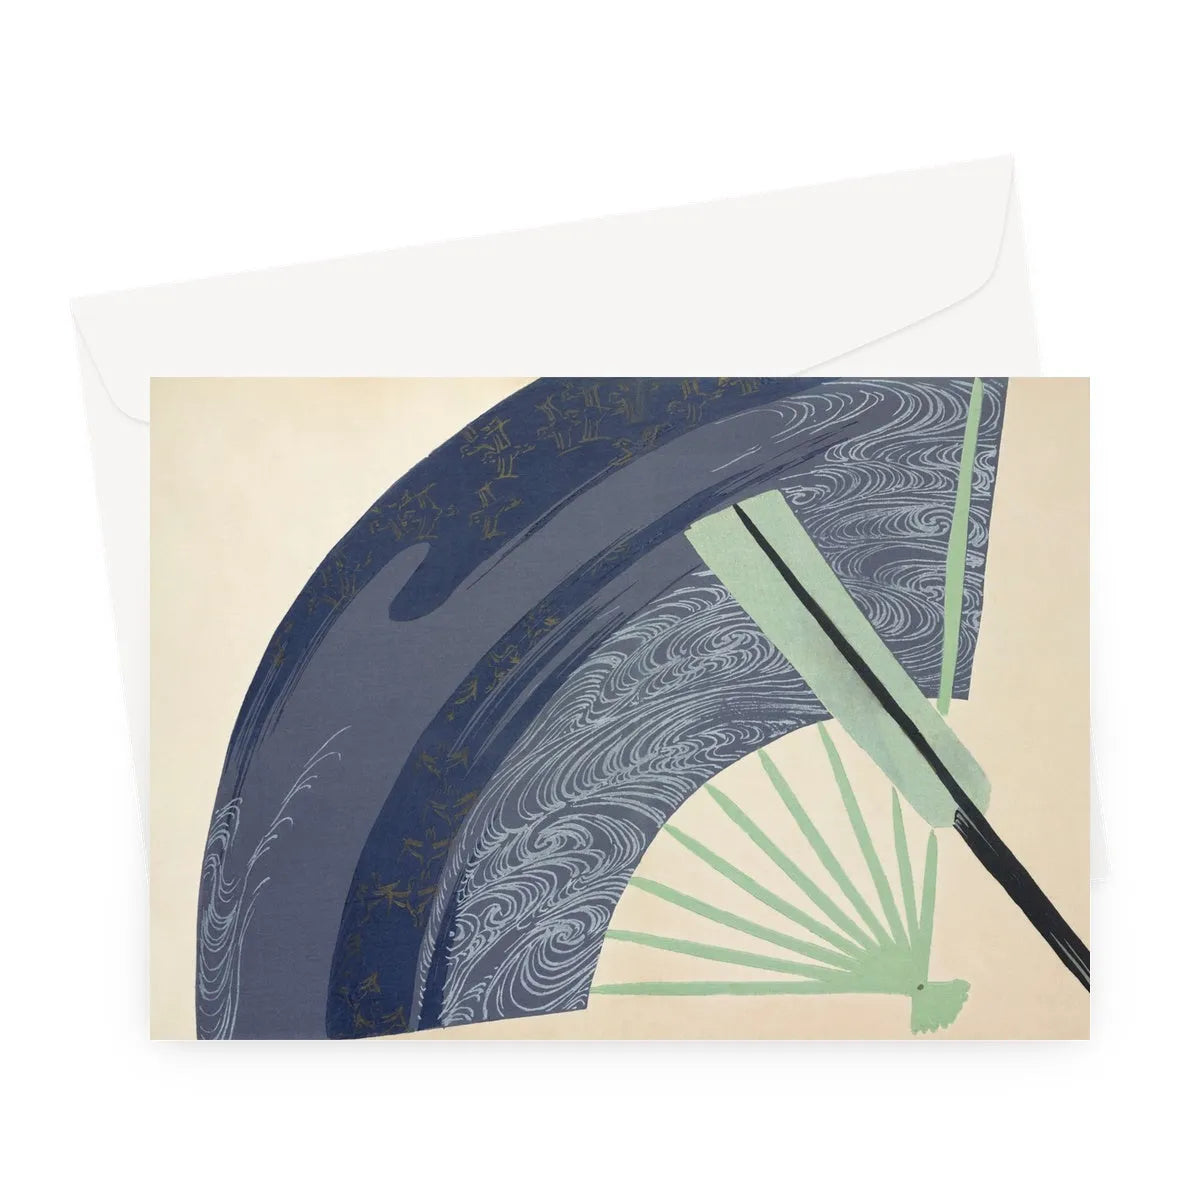 Fan By Kamisaka Sekka Greeting Card - A5 Landscape / 1 Card - Greeting & Note Cards - Aesthetic Art